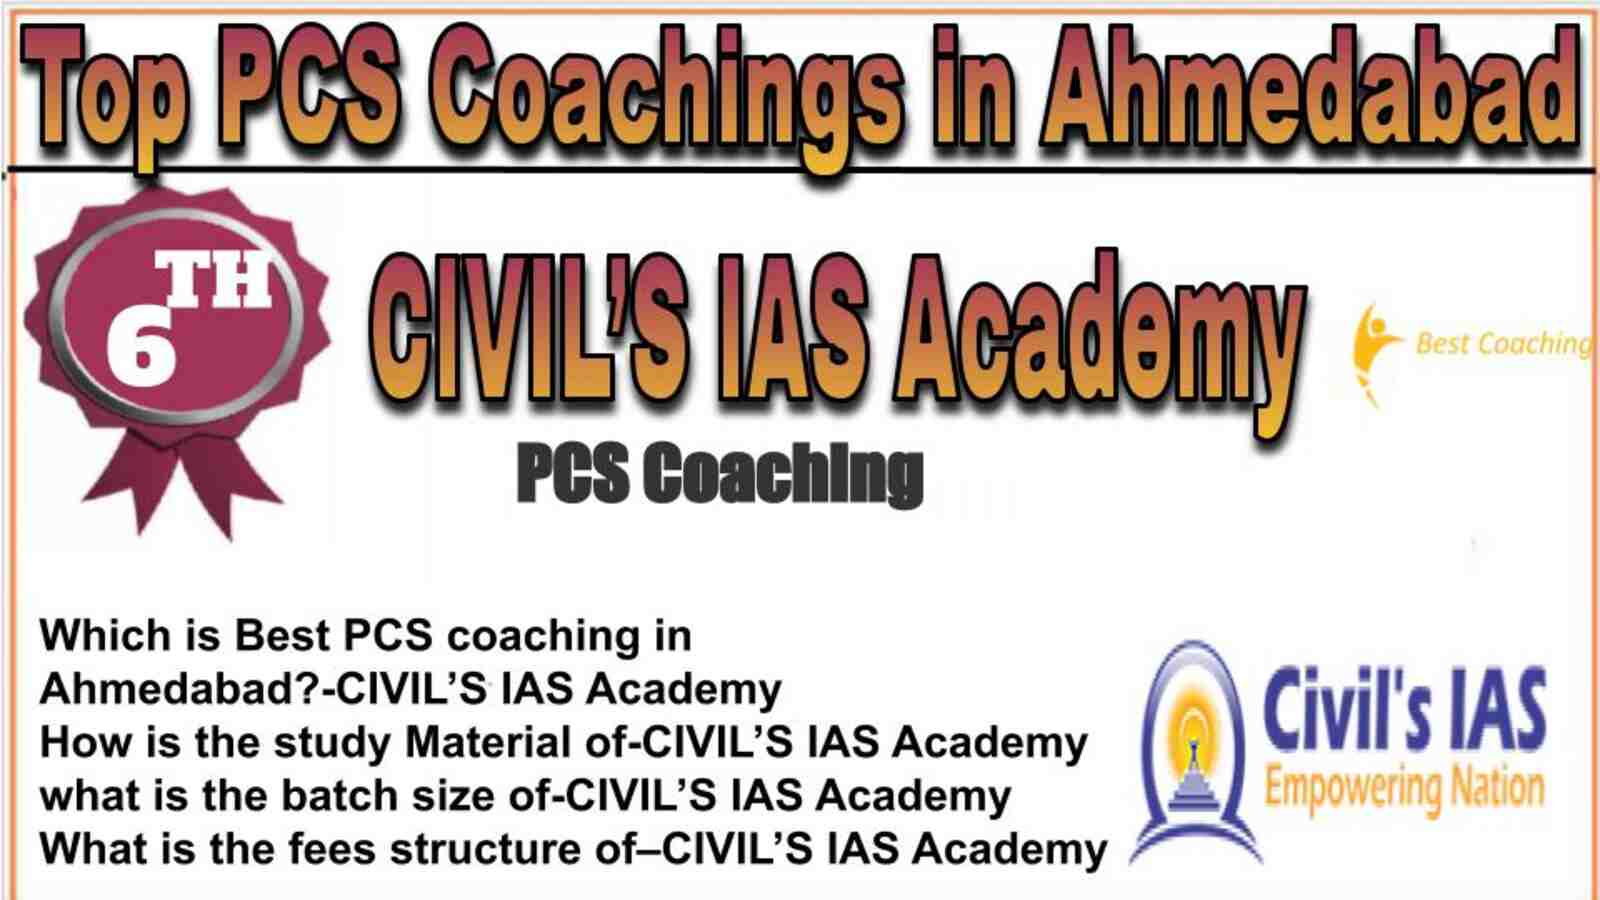 Rank 6 top PCS coachings in Ahmedabad